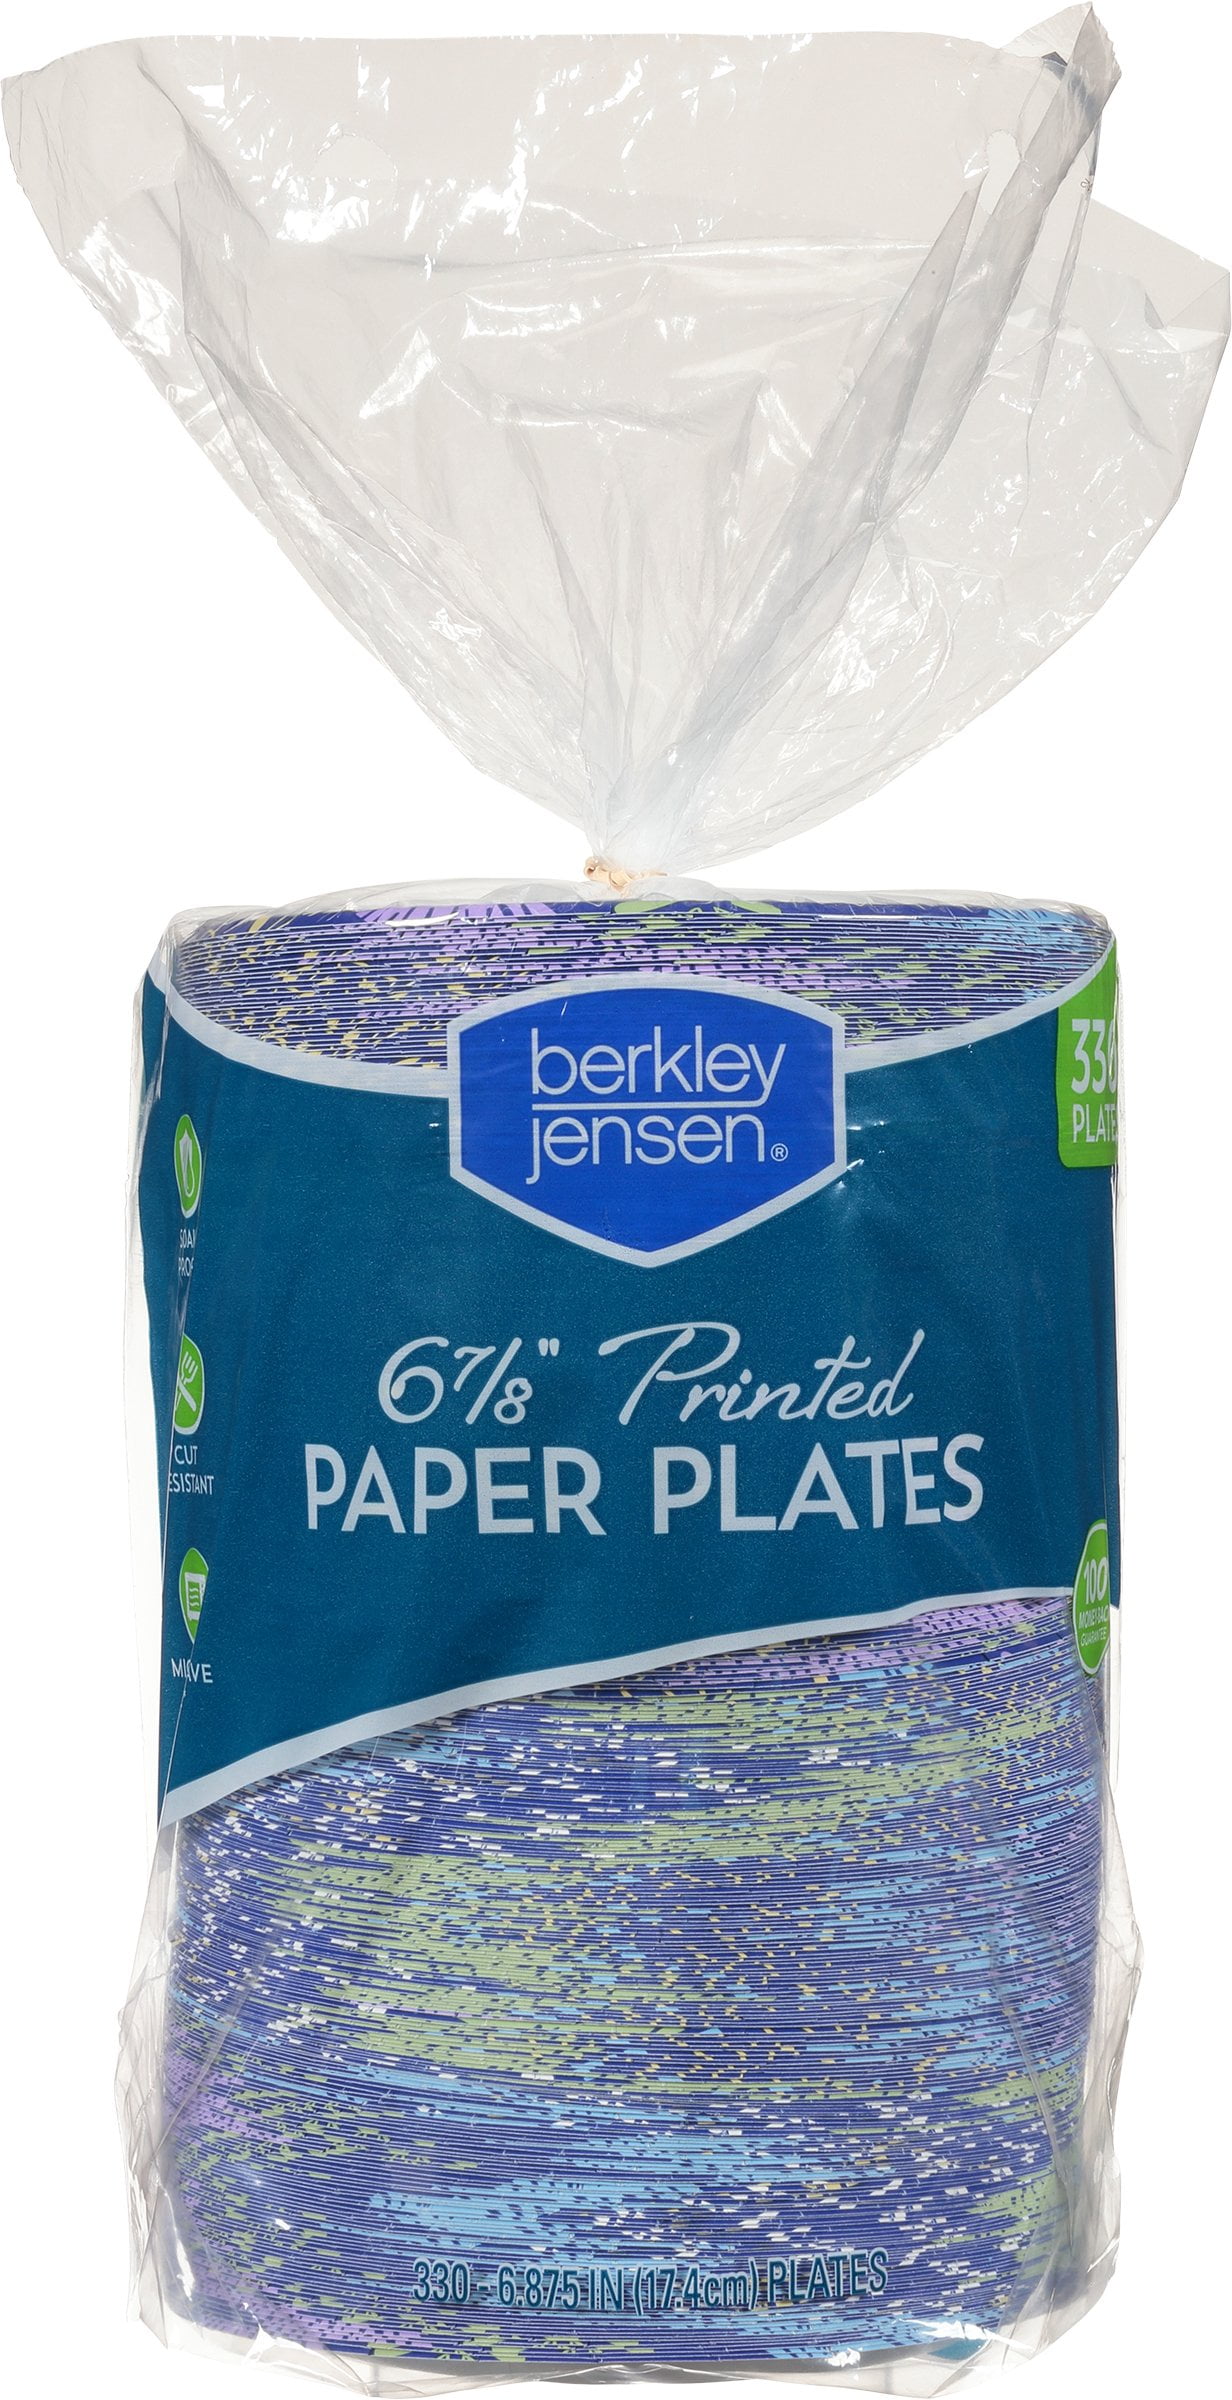 Berkley Jensen 7 White Plastic Dessert Plates